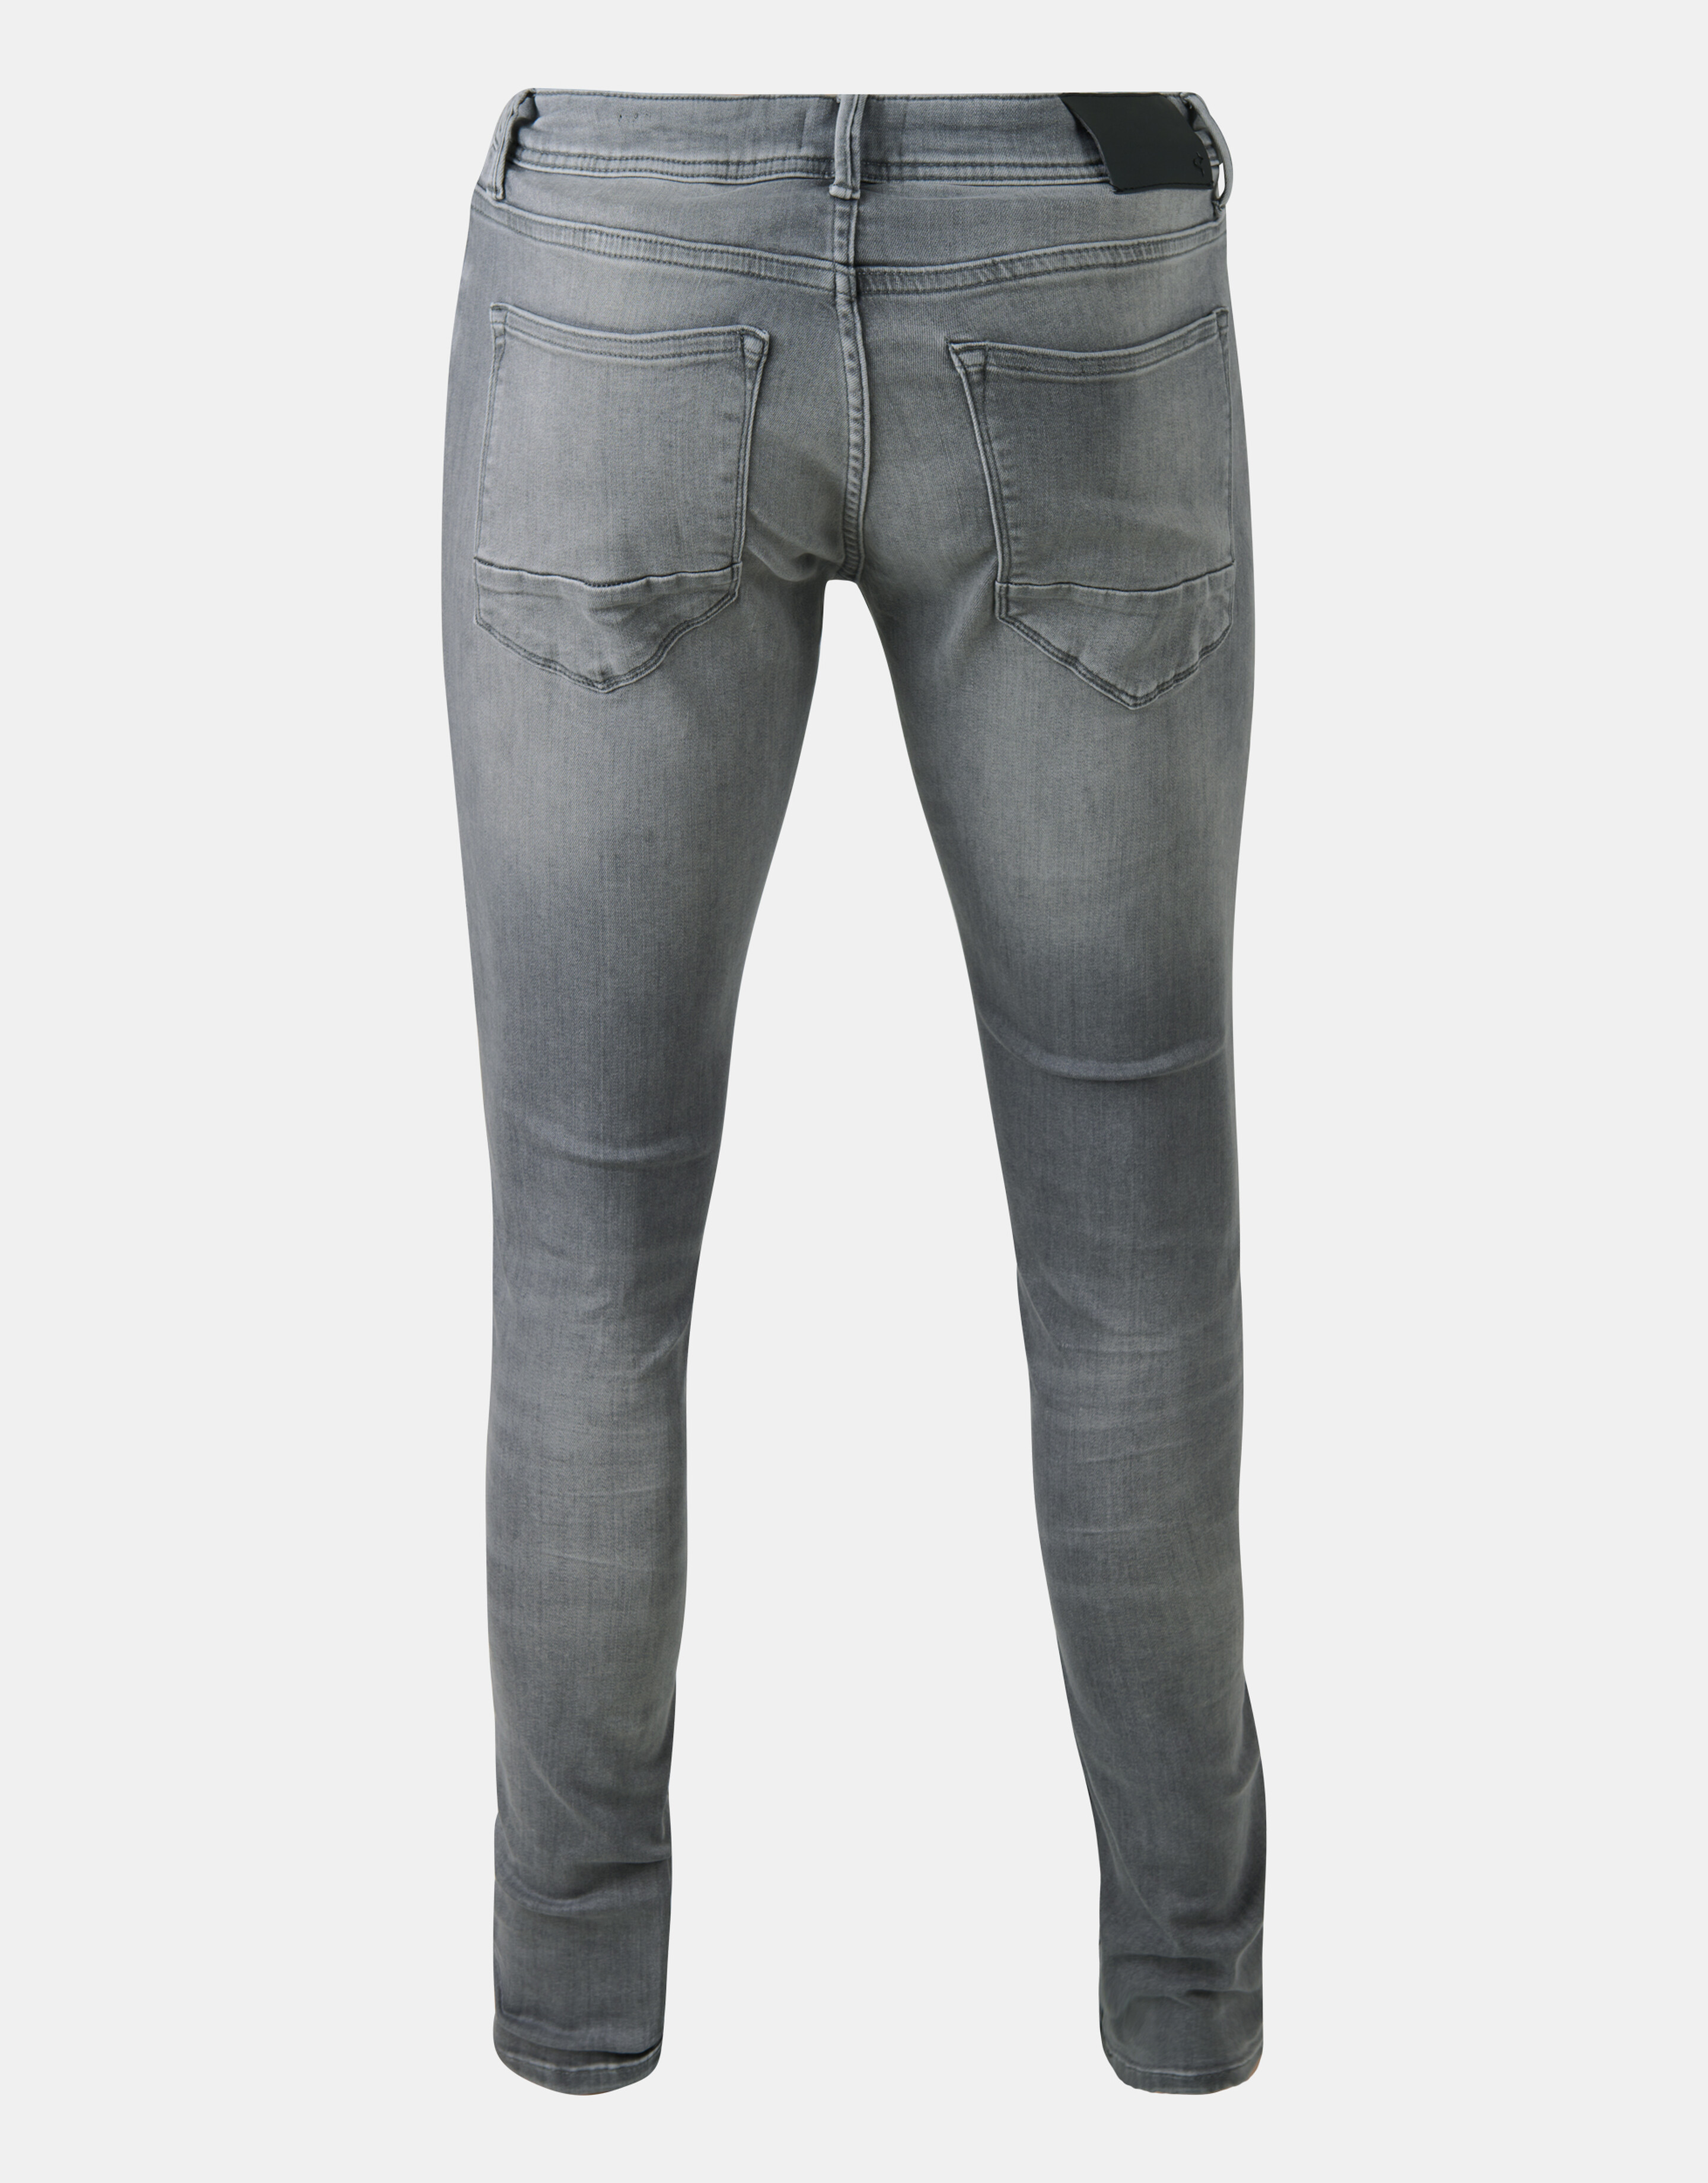 Leroy Skinny Jack Jeans L34 Refill